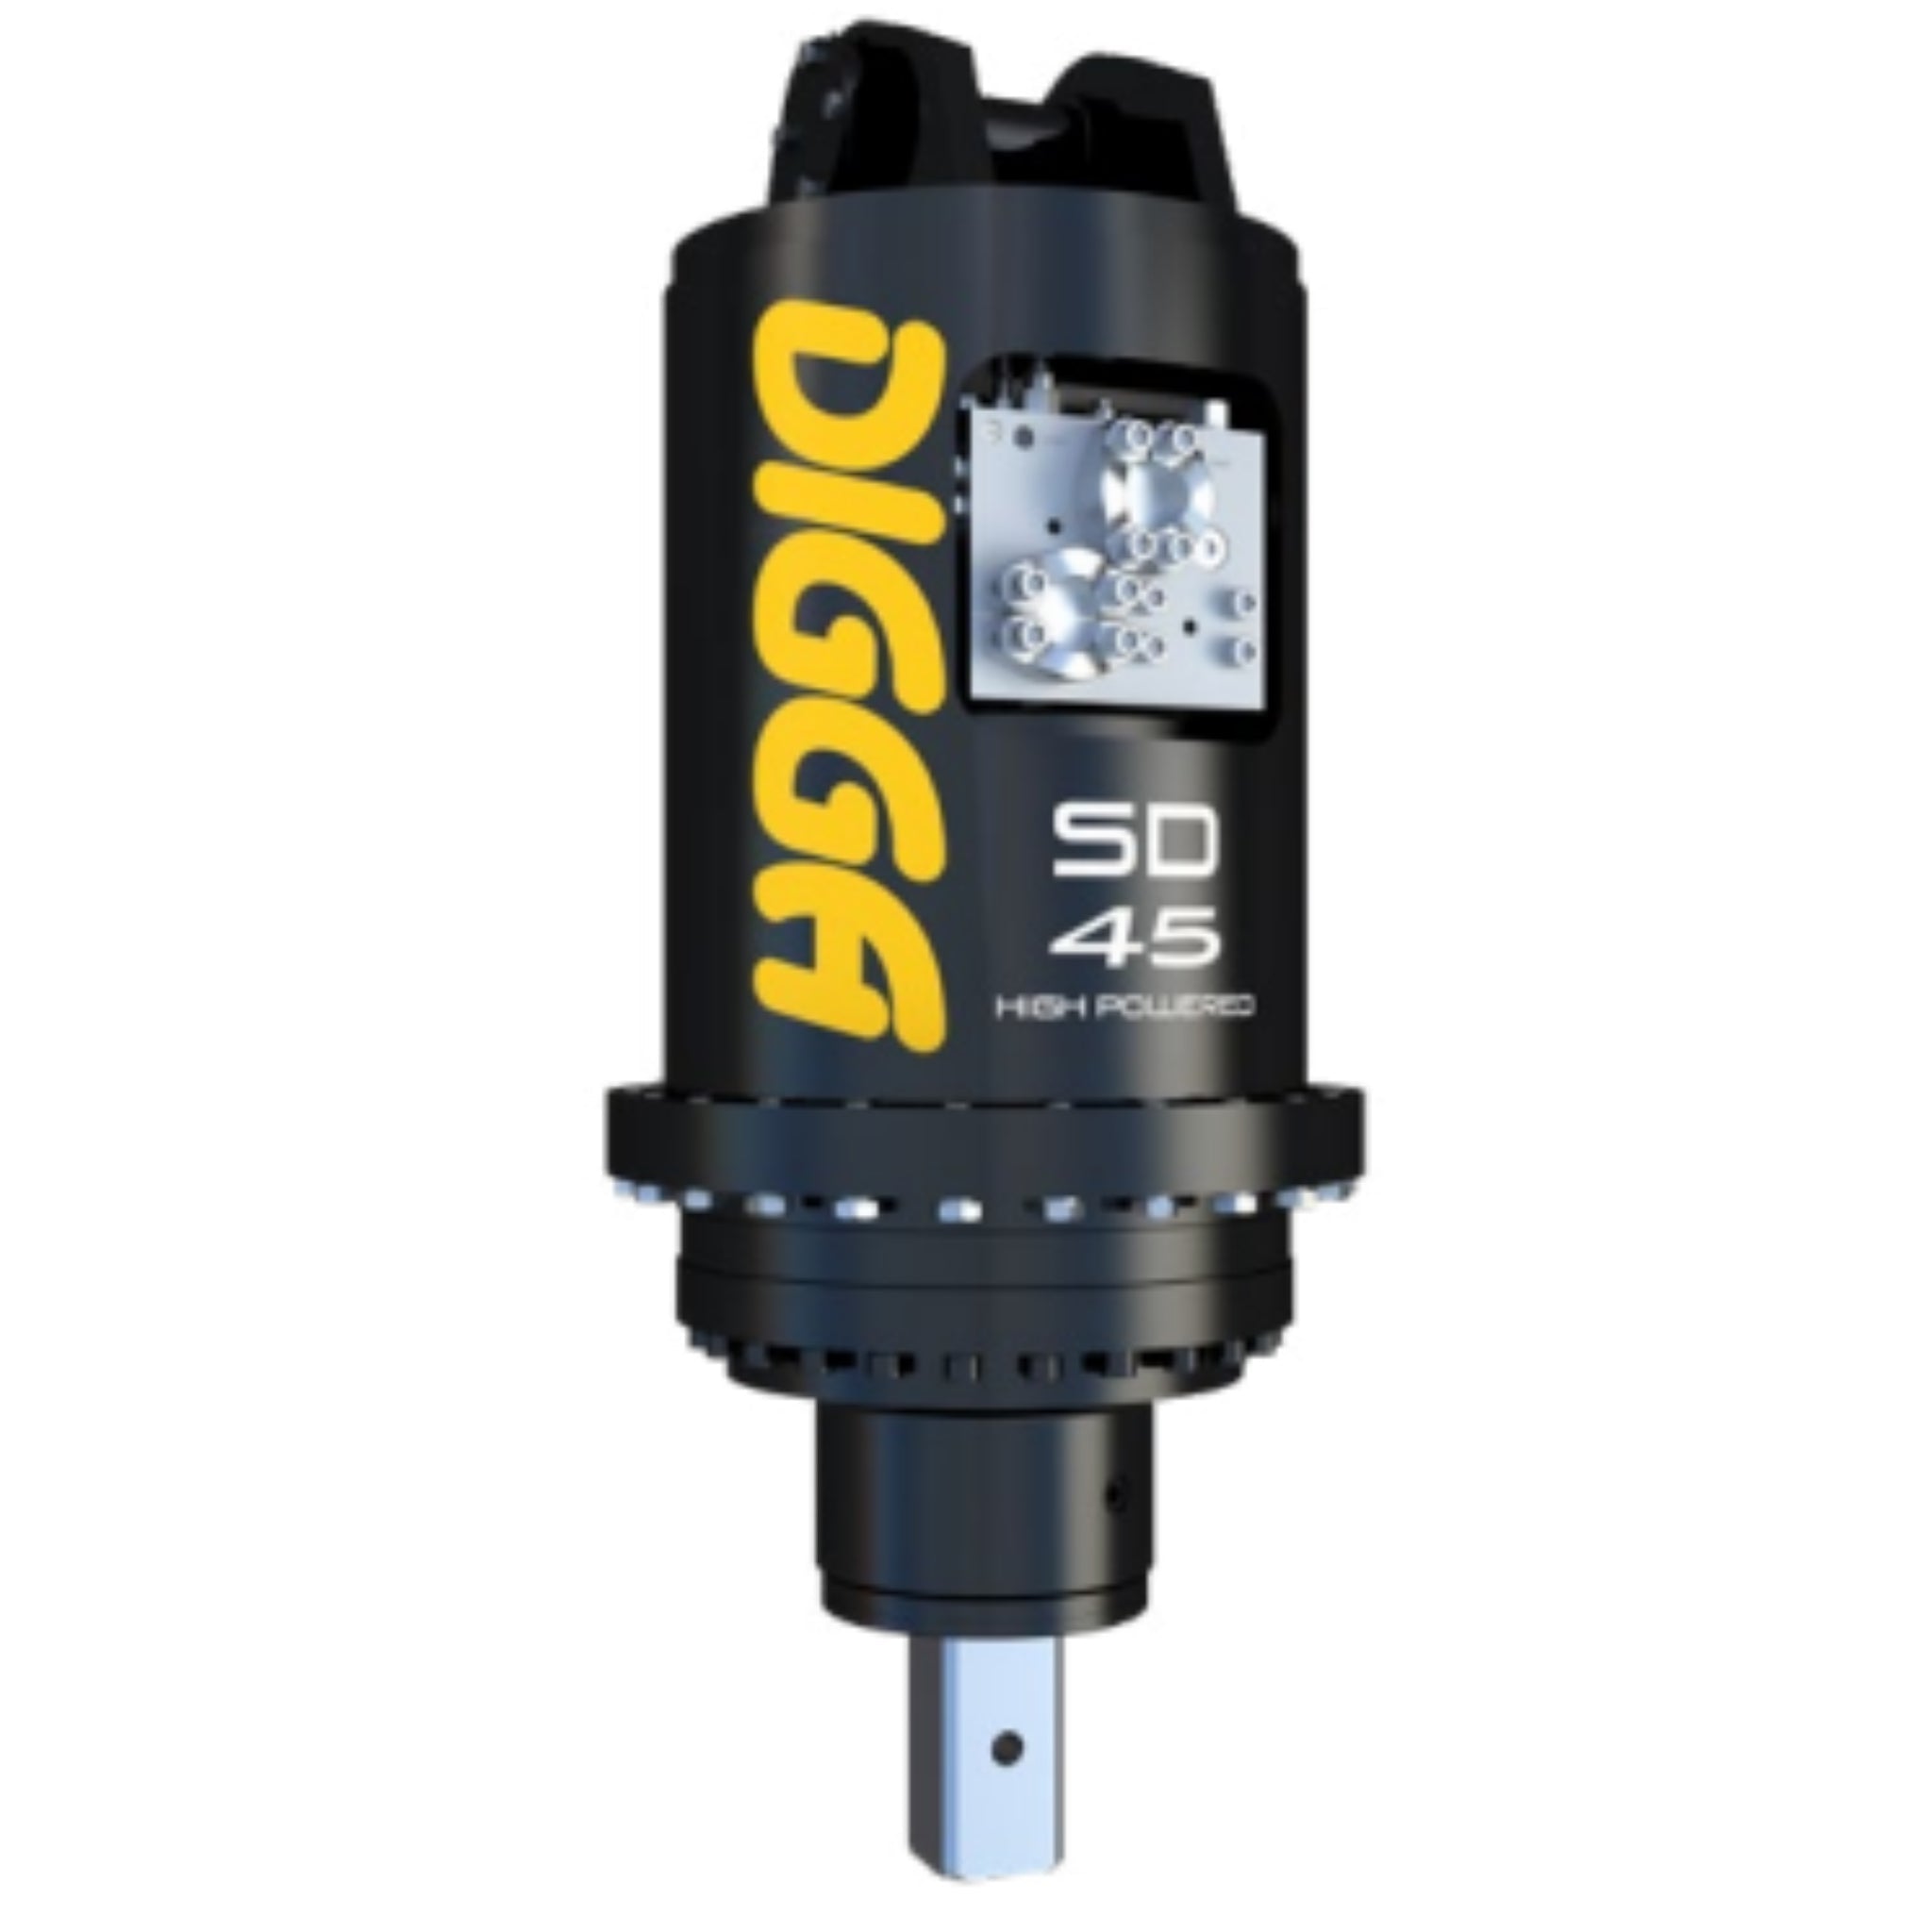 Digga SD45HPS High Powered "Supa" Drilling Single Speed Auger Drive